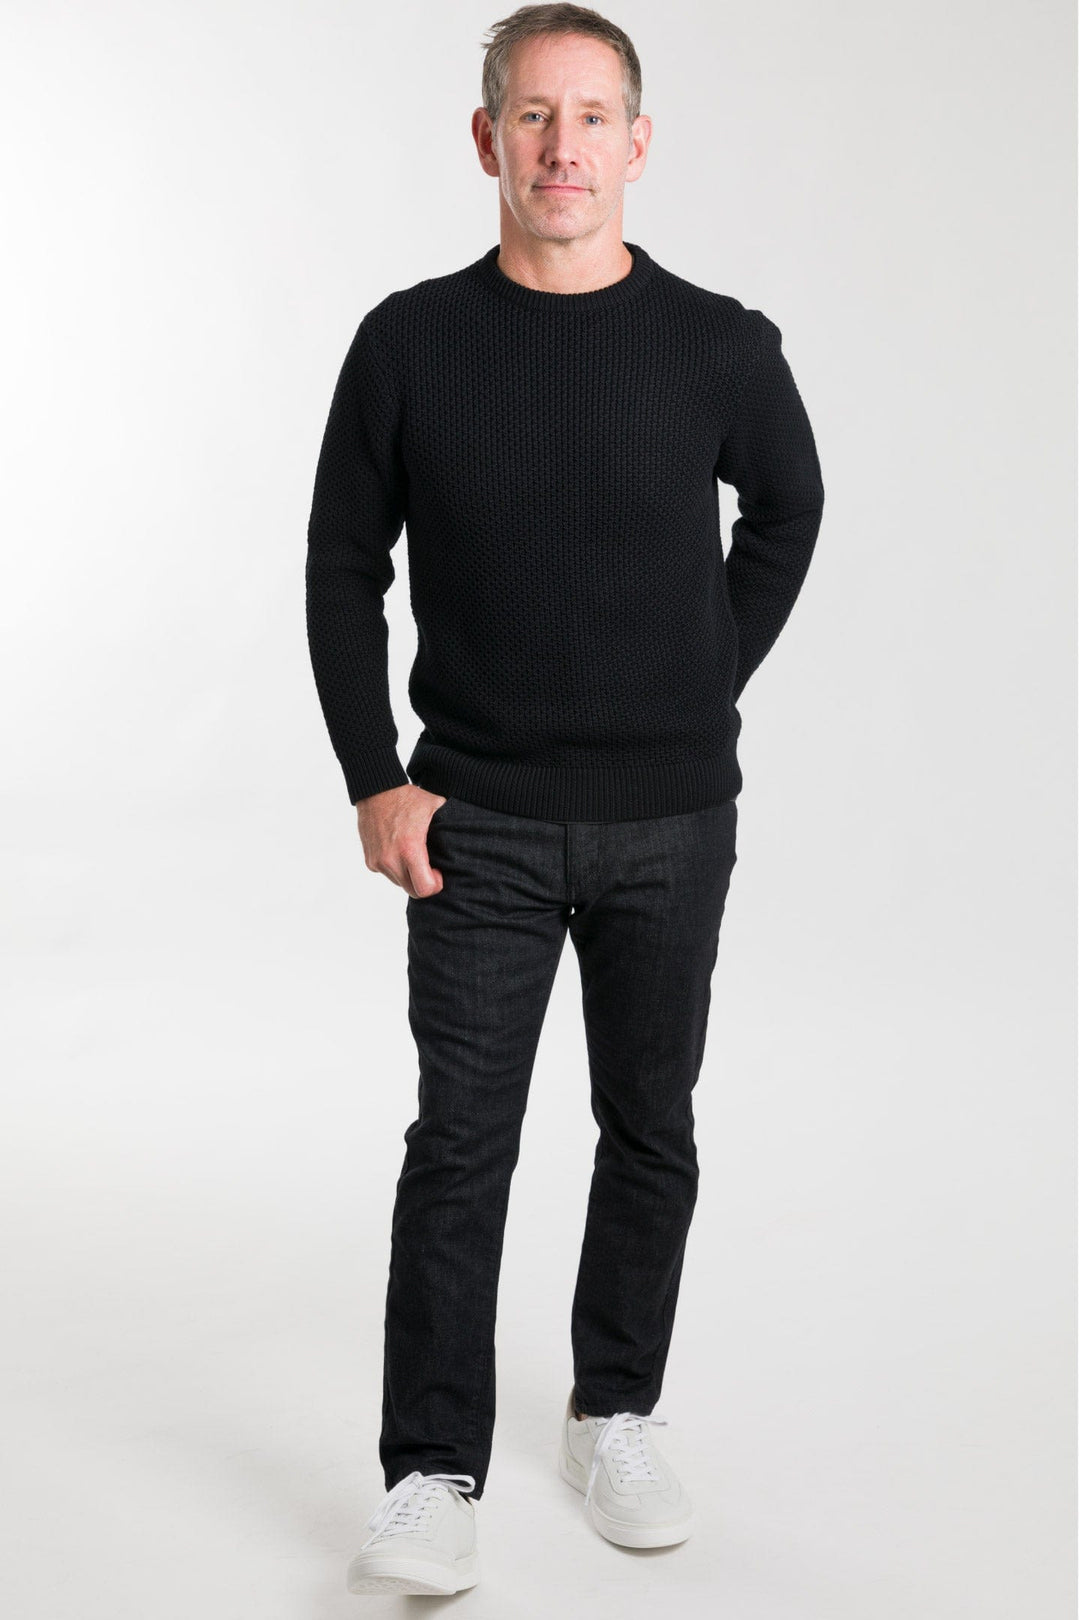 Buy Black Waffle Knit Sweater for Short Men | Ash & Erie   Sweater